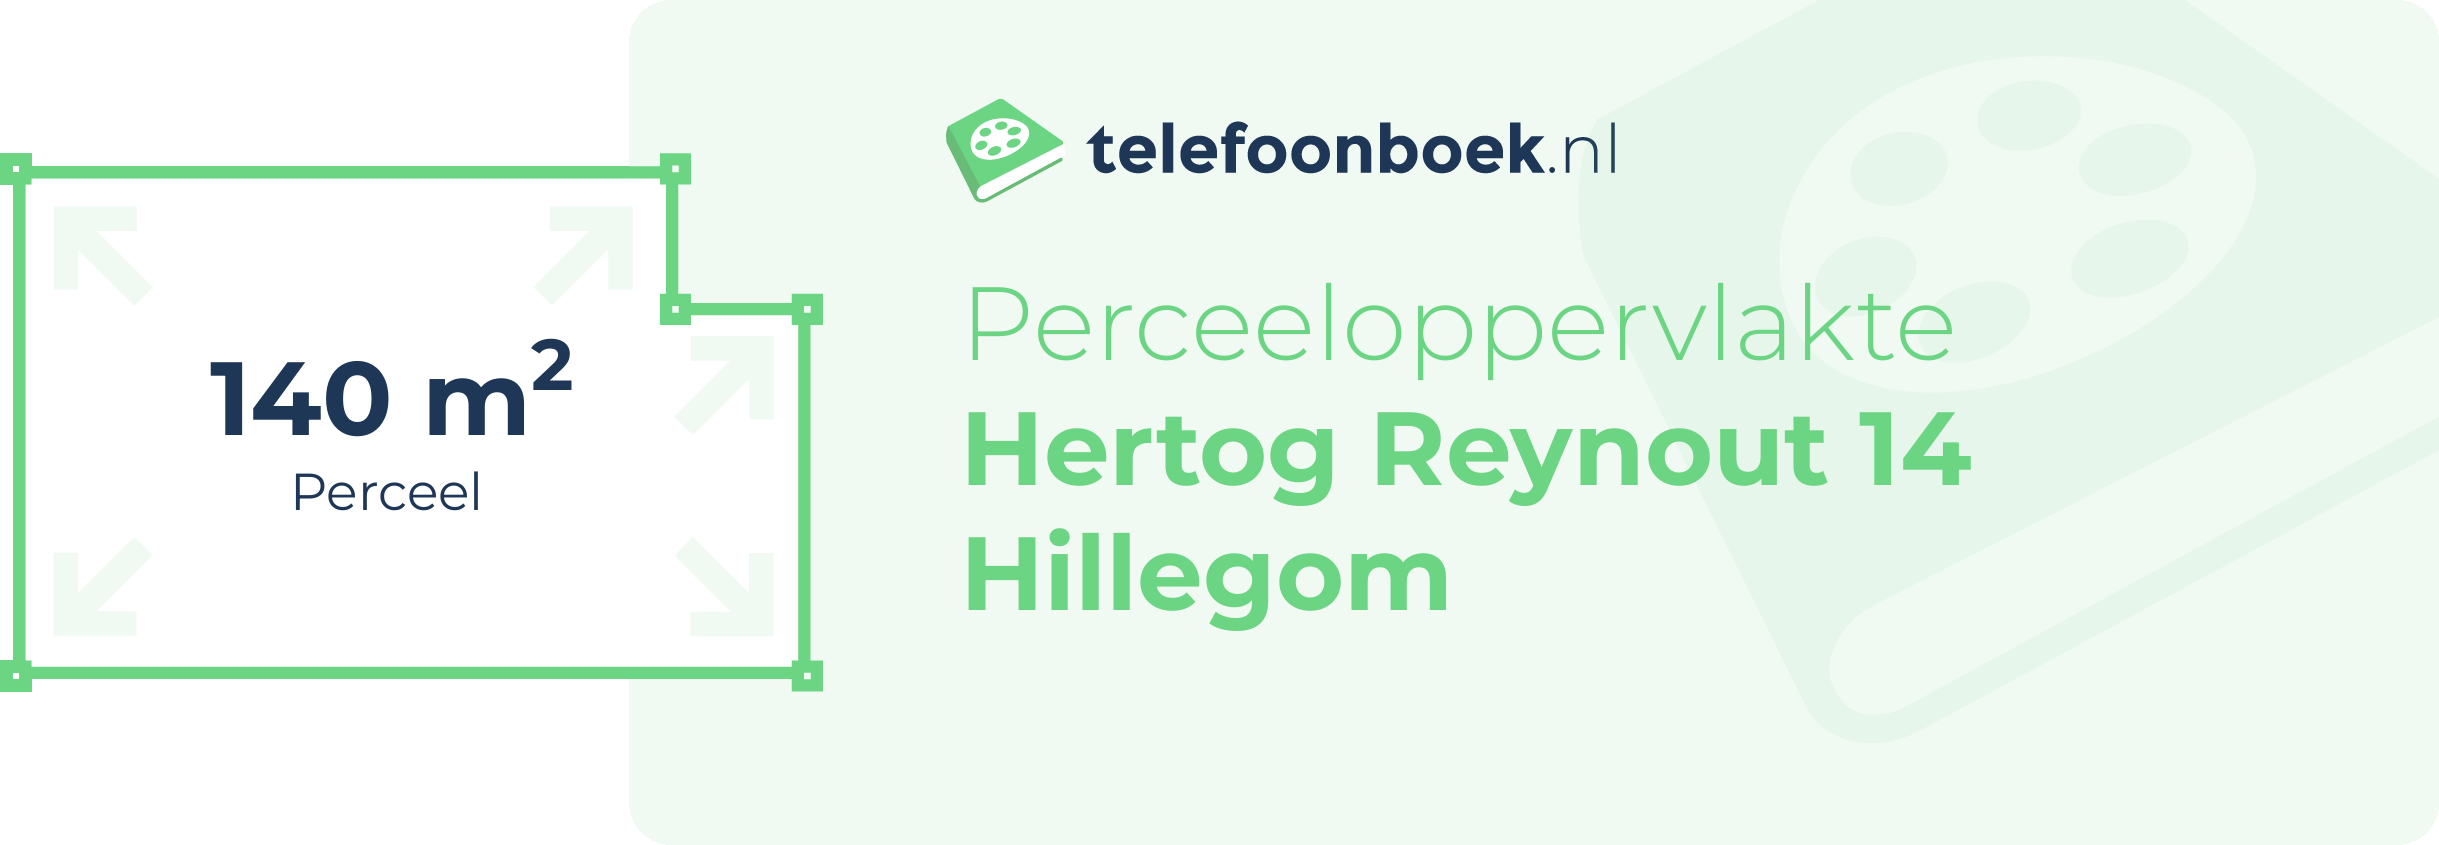 Perceeloppervlakte Hertog Reynout 14 Hillegom